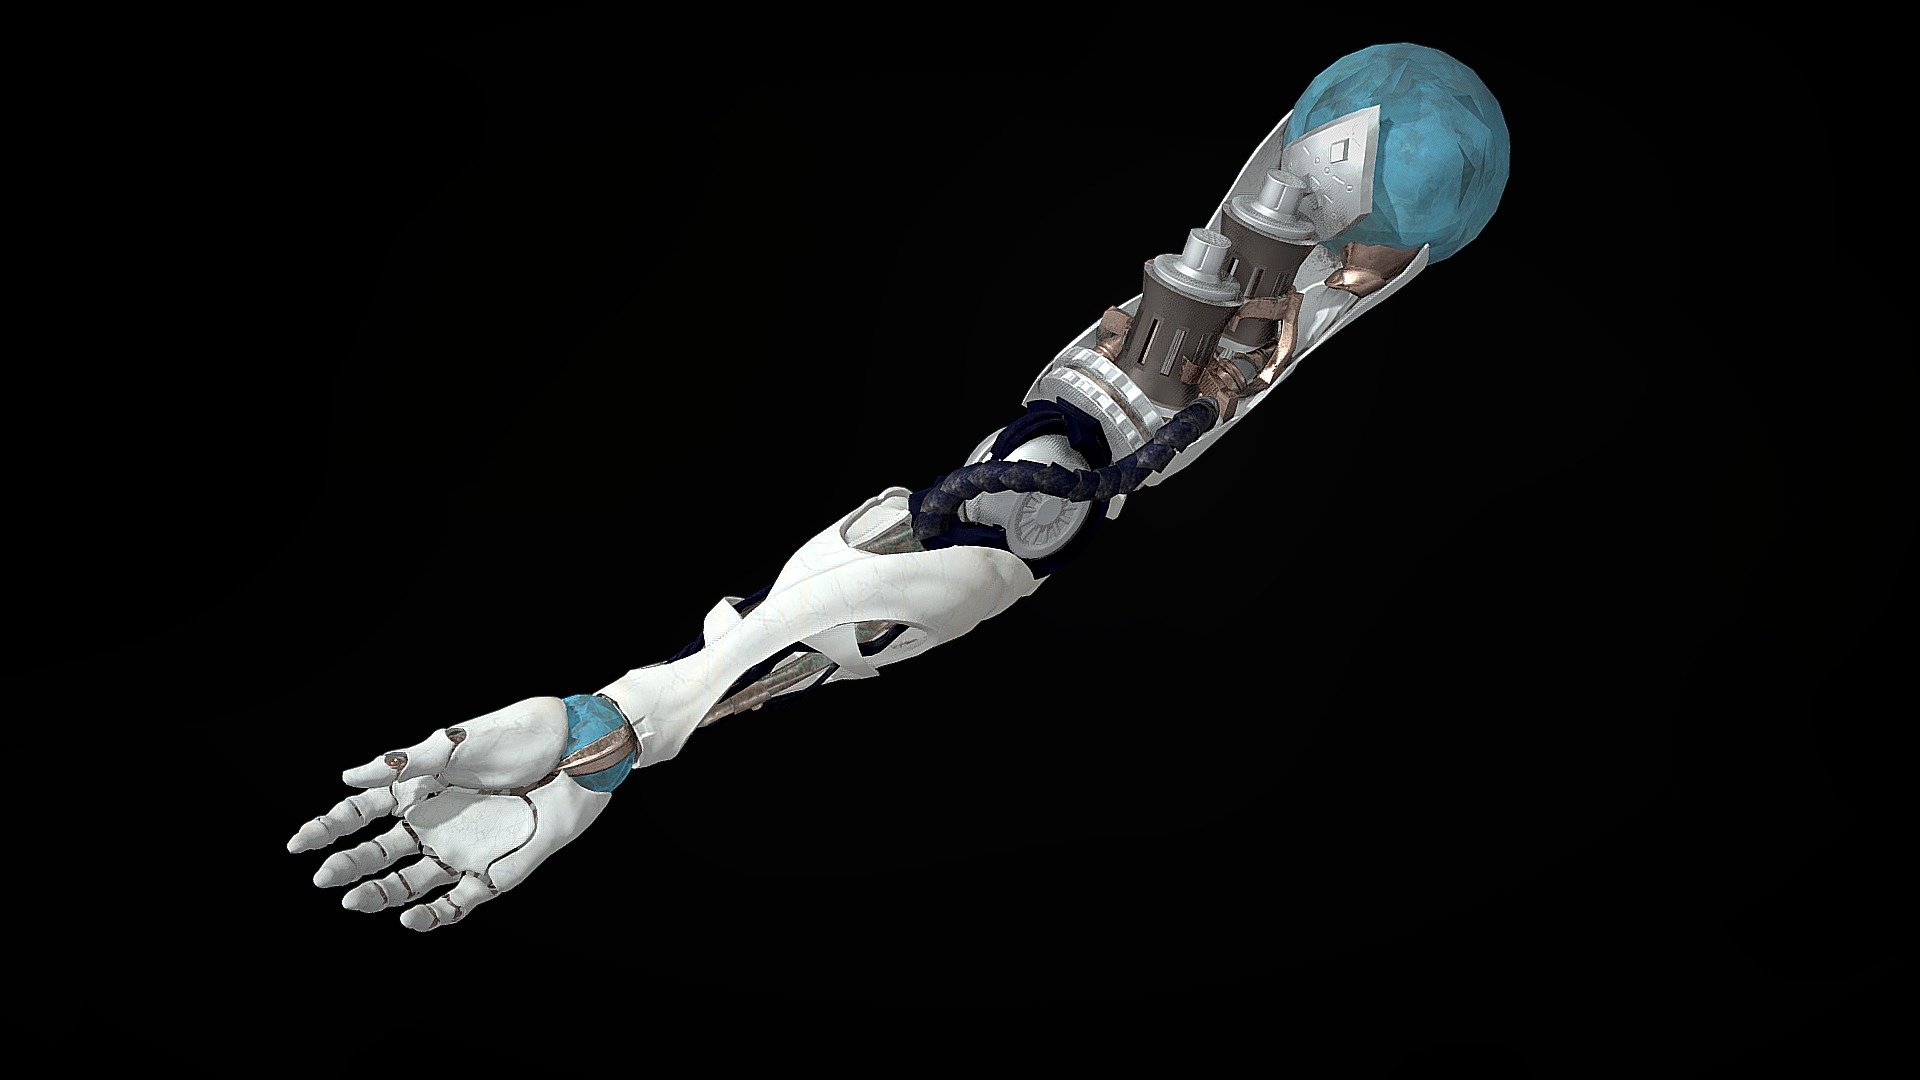 Final Assigment for Game Asset Pipeline - Prostetic Robot Arm - 3D model by JohannaSilver 3d model